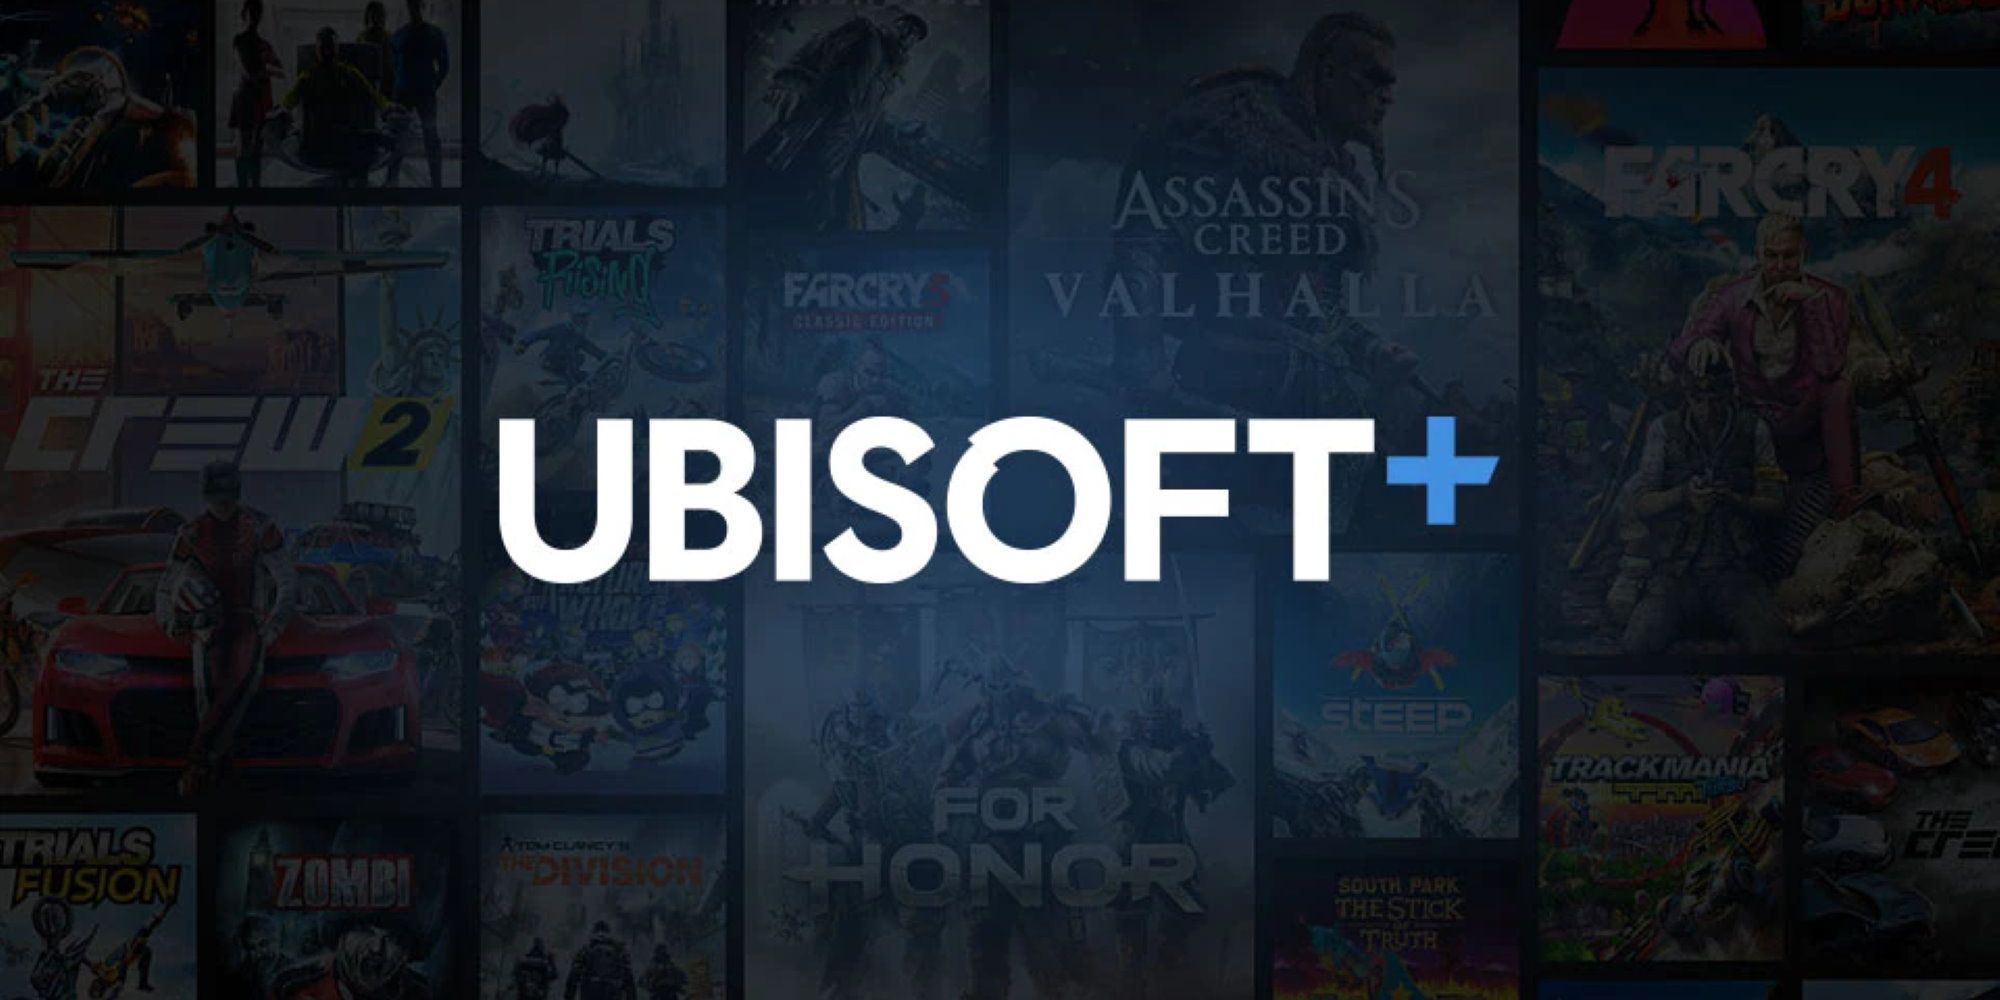 Ubisoft Plus - via Ubisoft